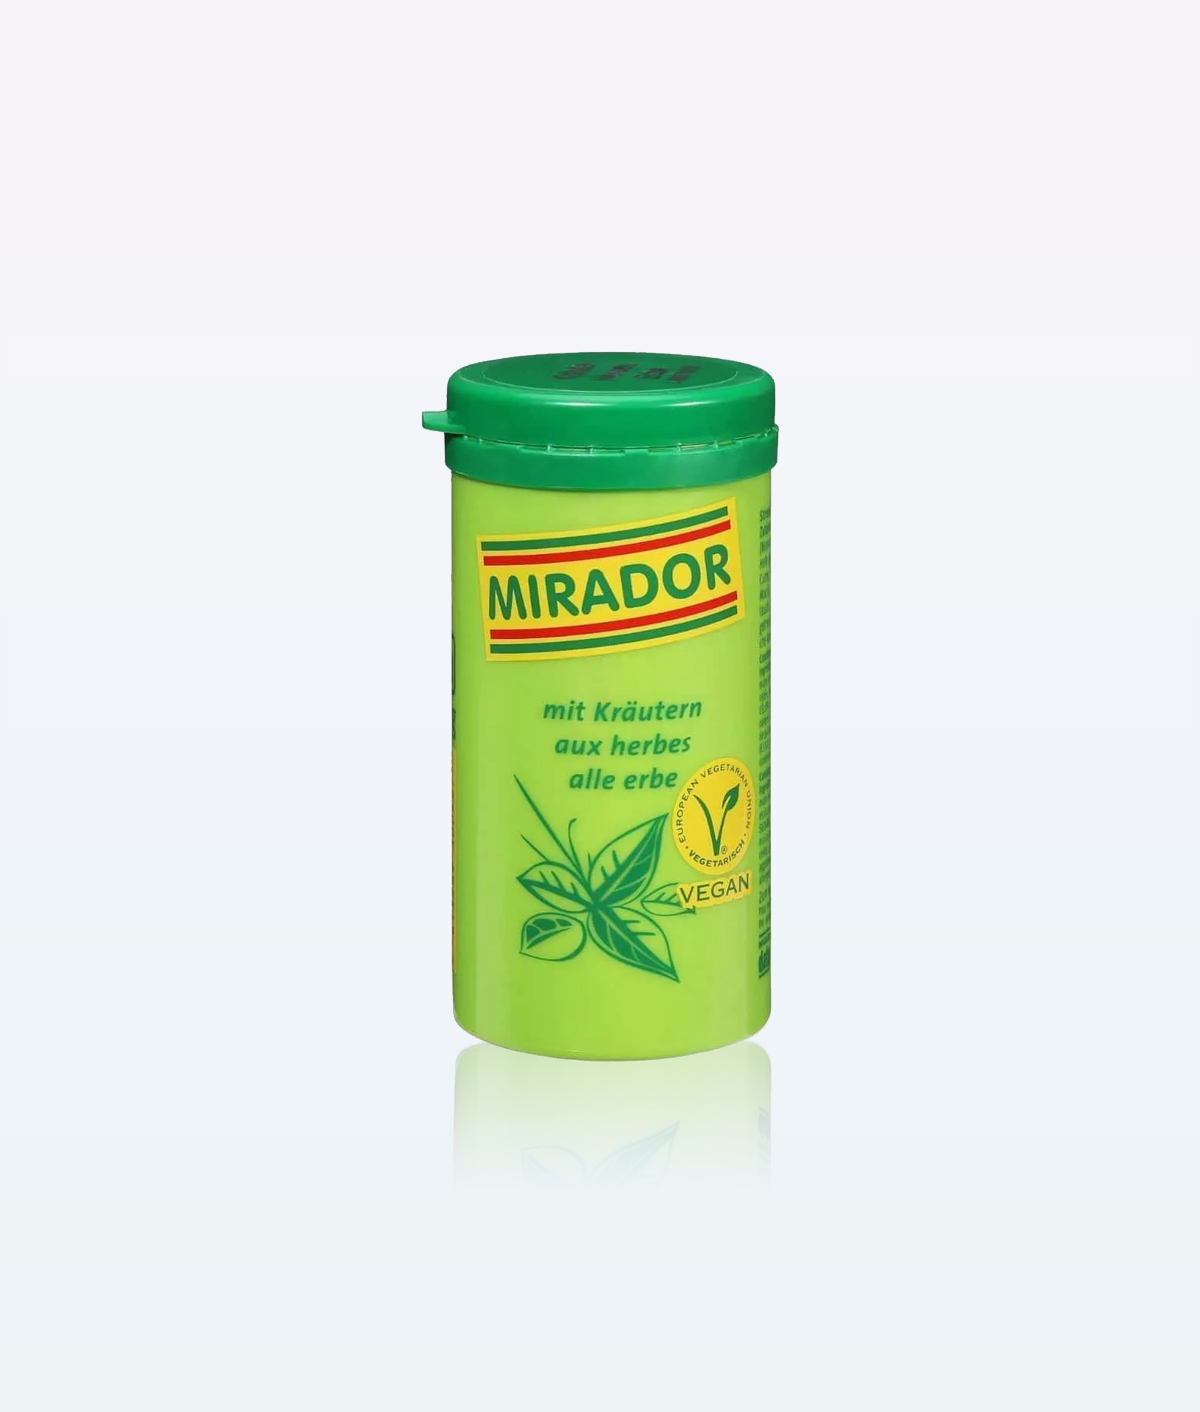 Mirador Spice with Herbs